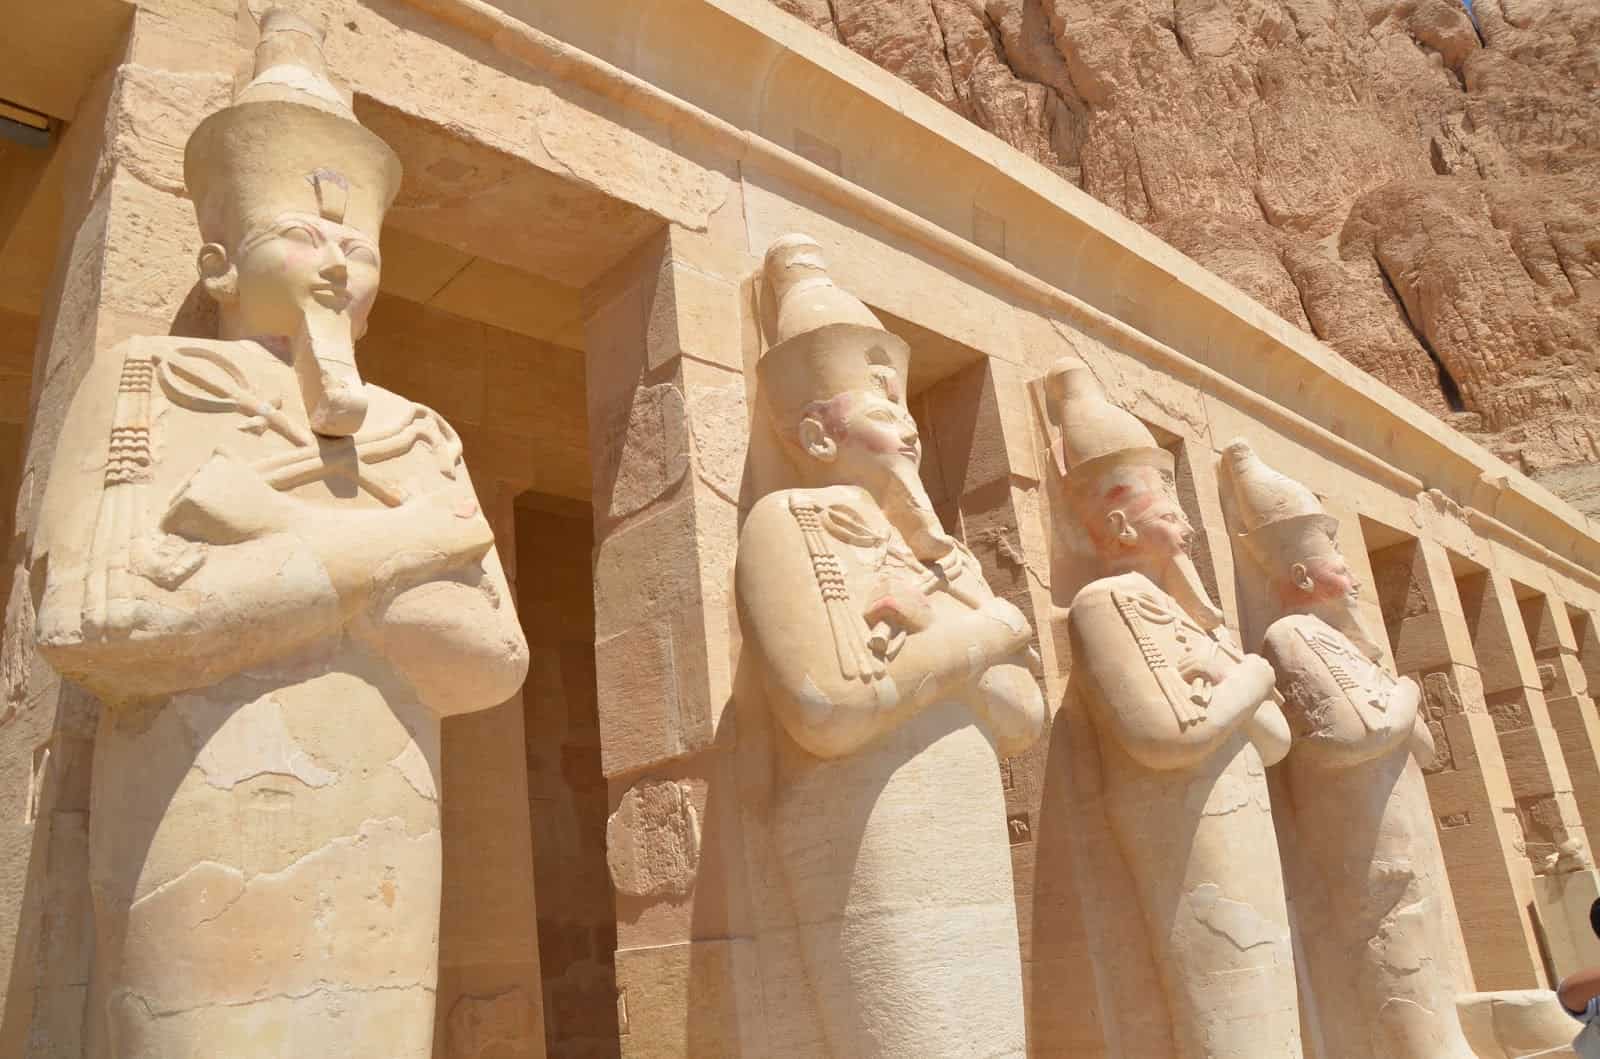 Statues outside the Temple of Hatshepsut in Luxor, Egypt